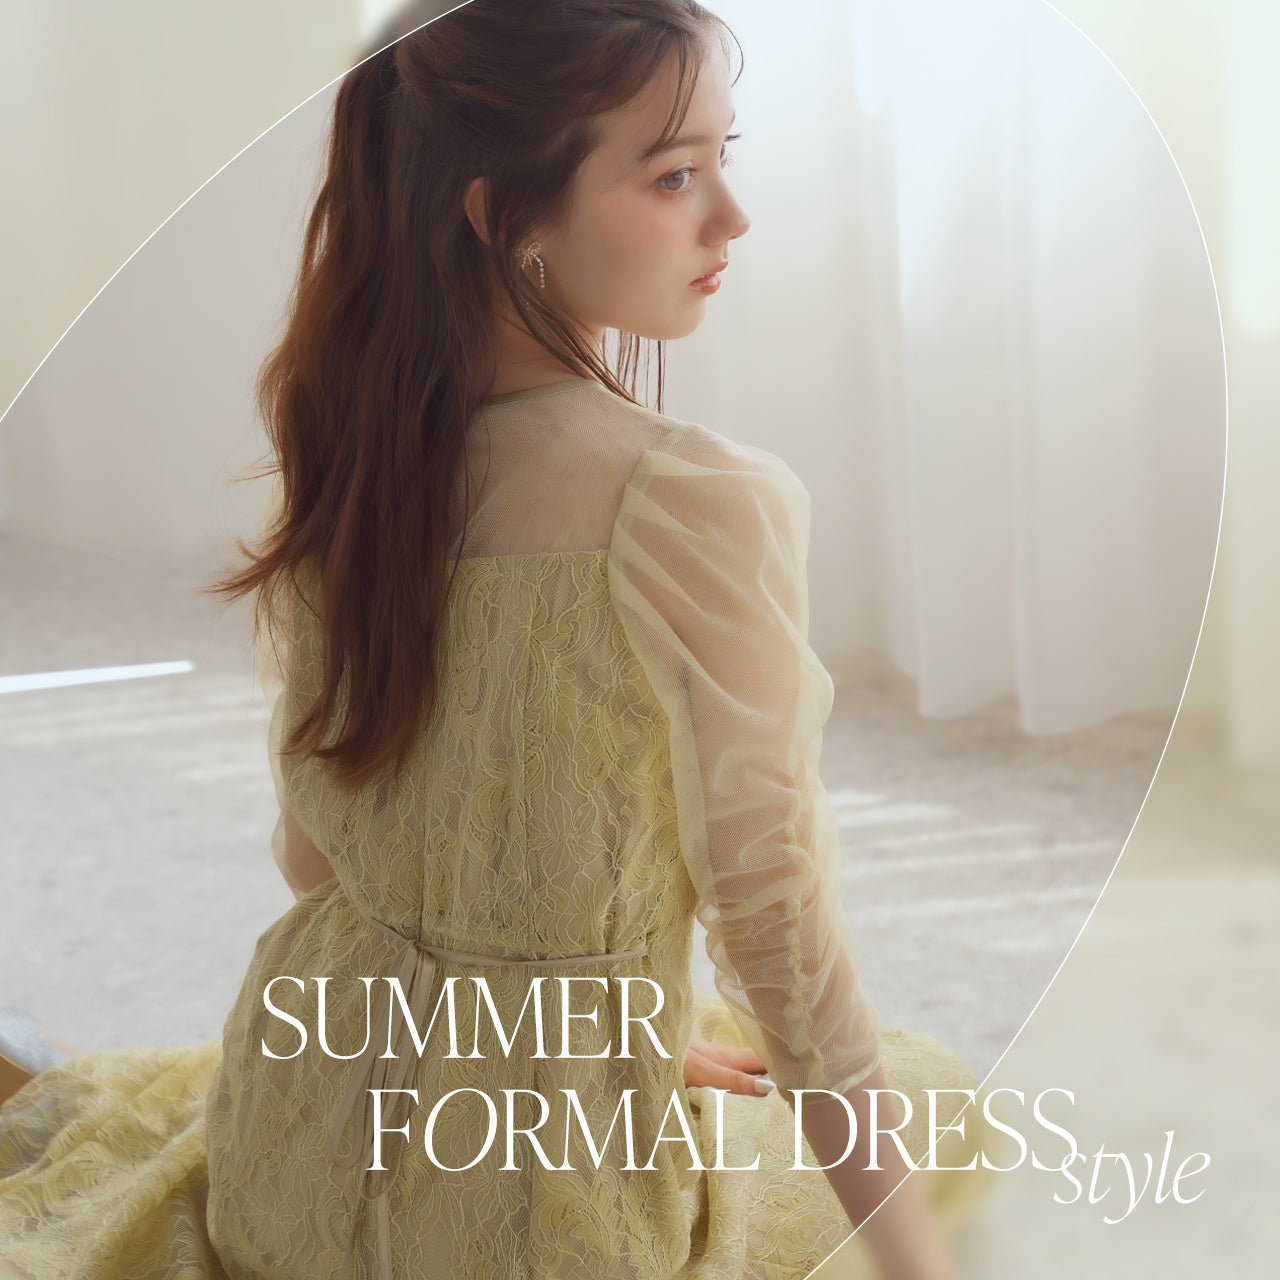 Summer Formal Dress Style